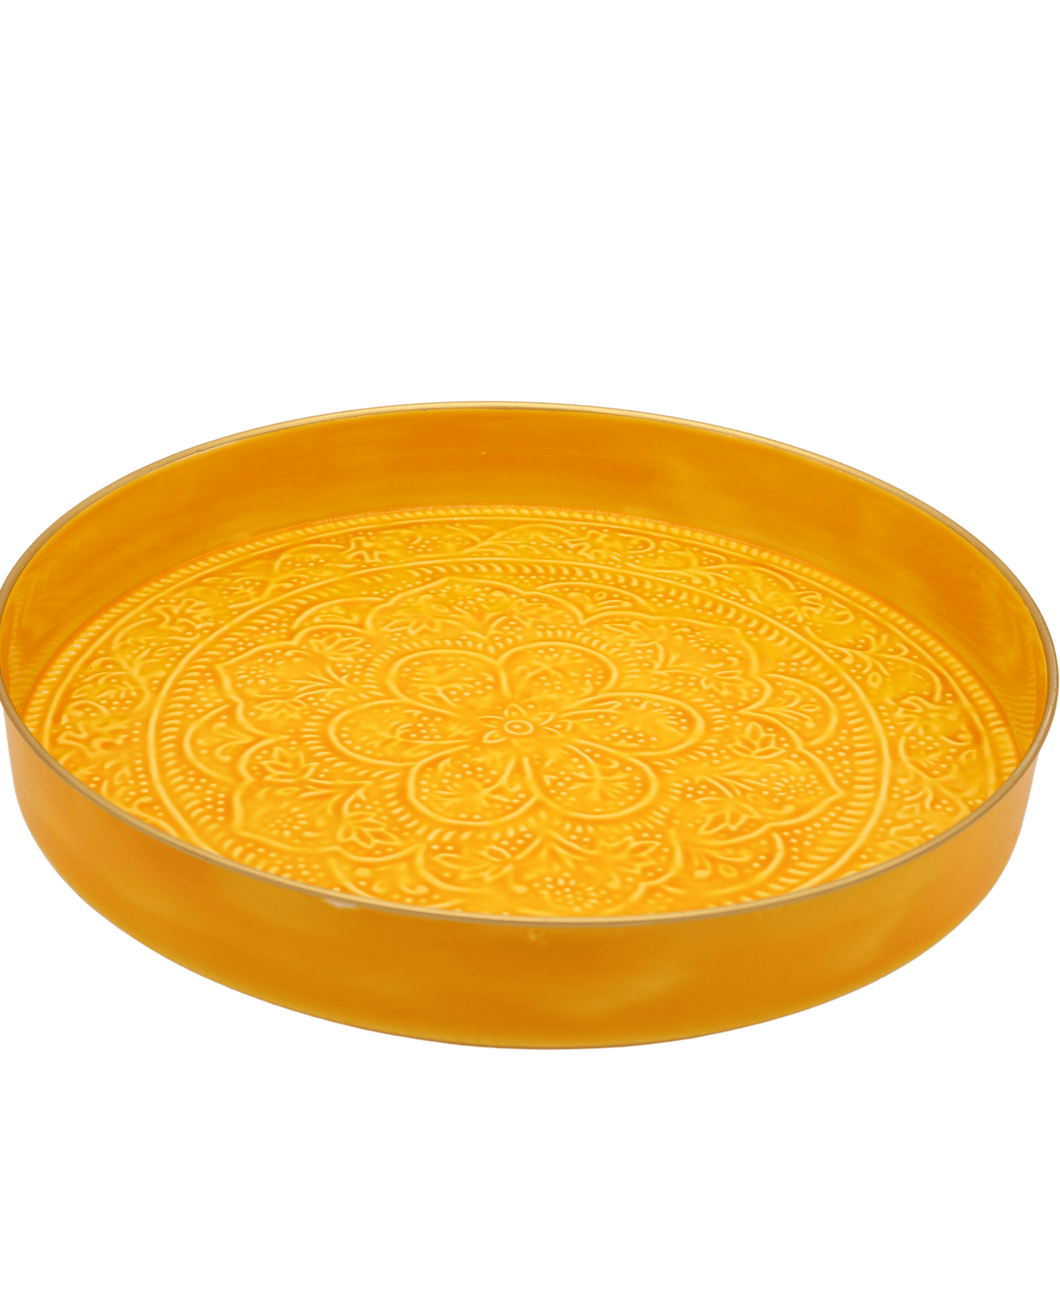 Large Enamel Yellow Tray